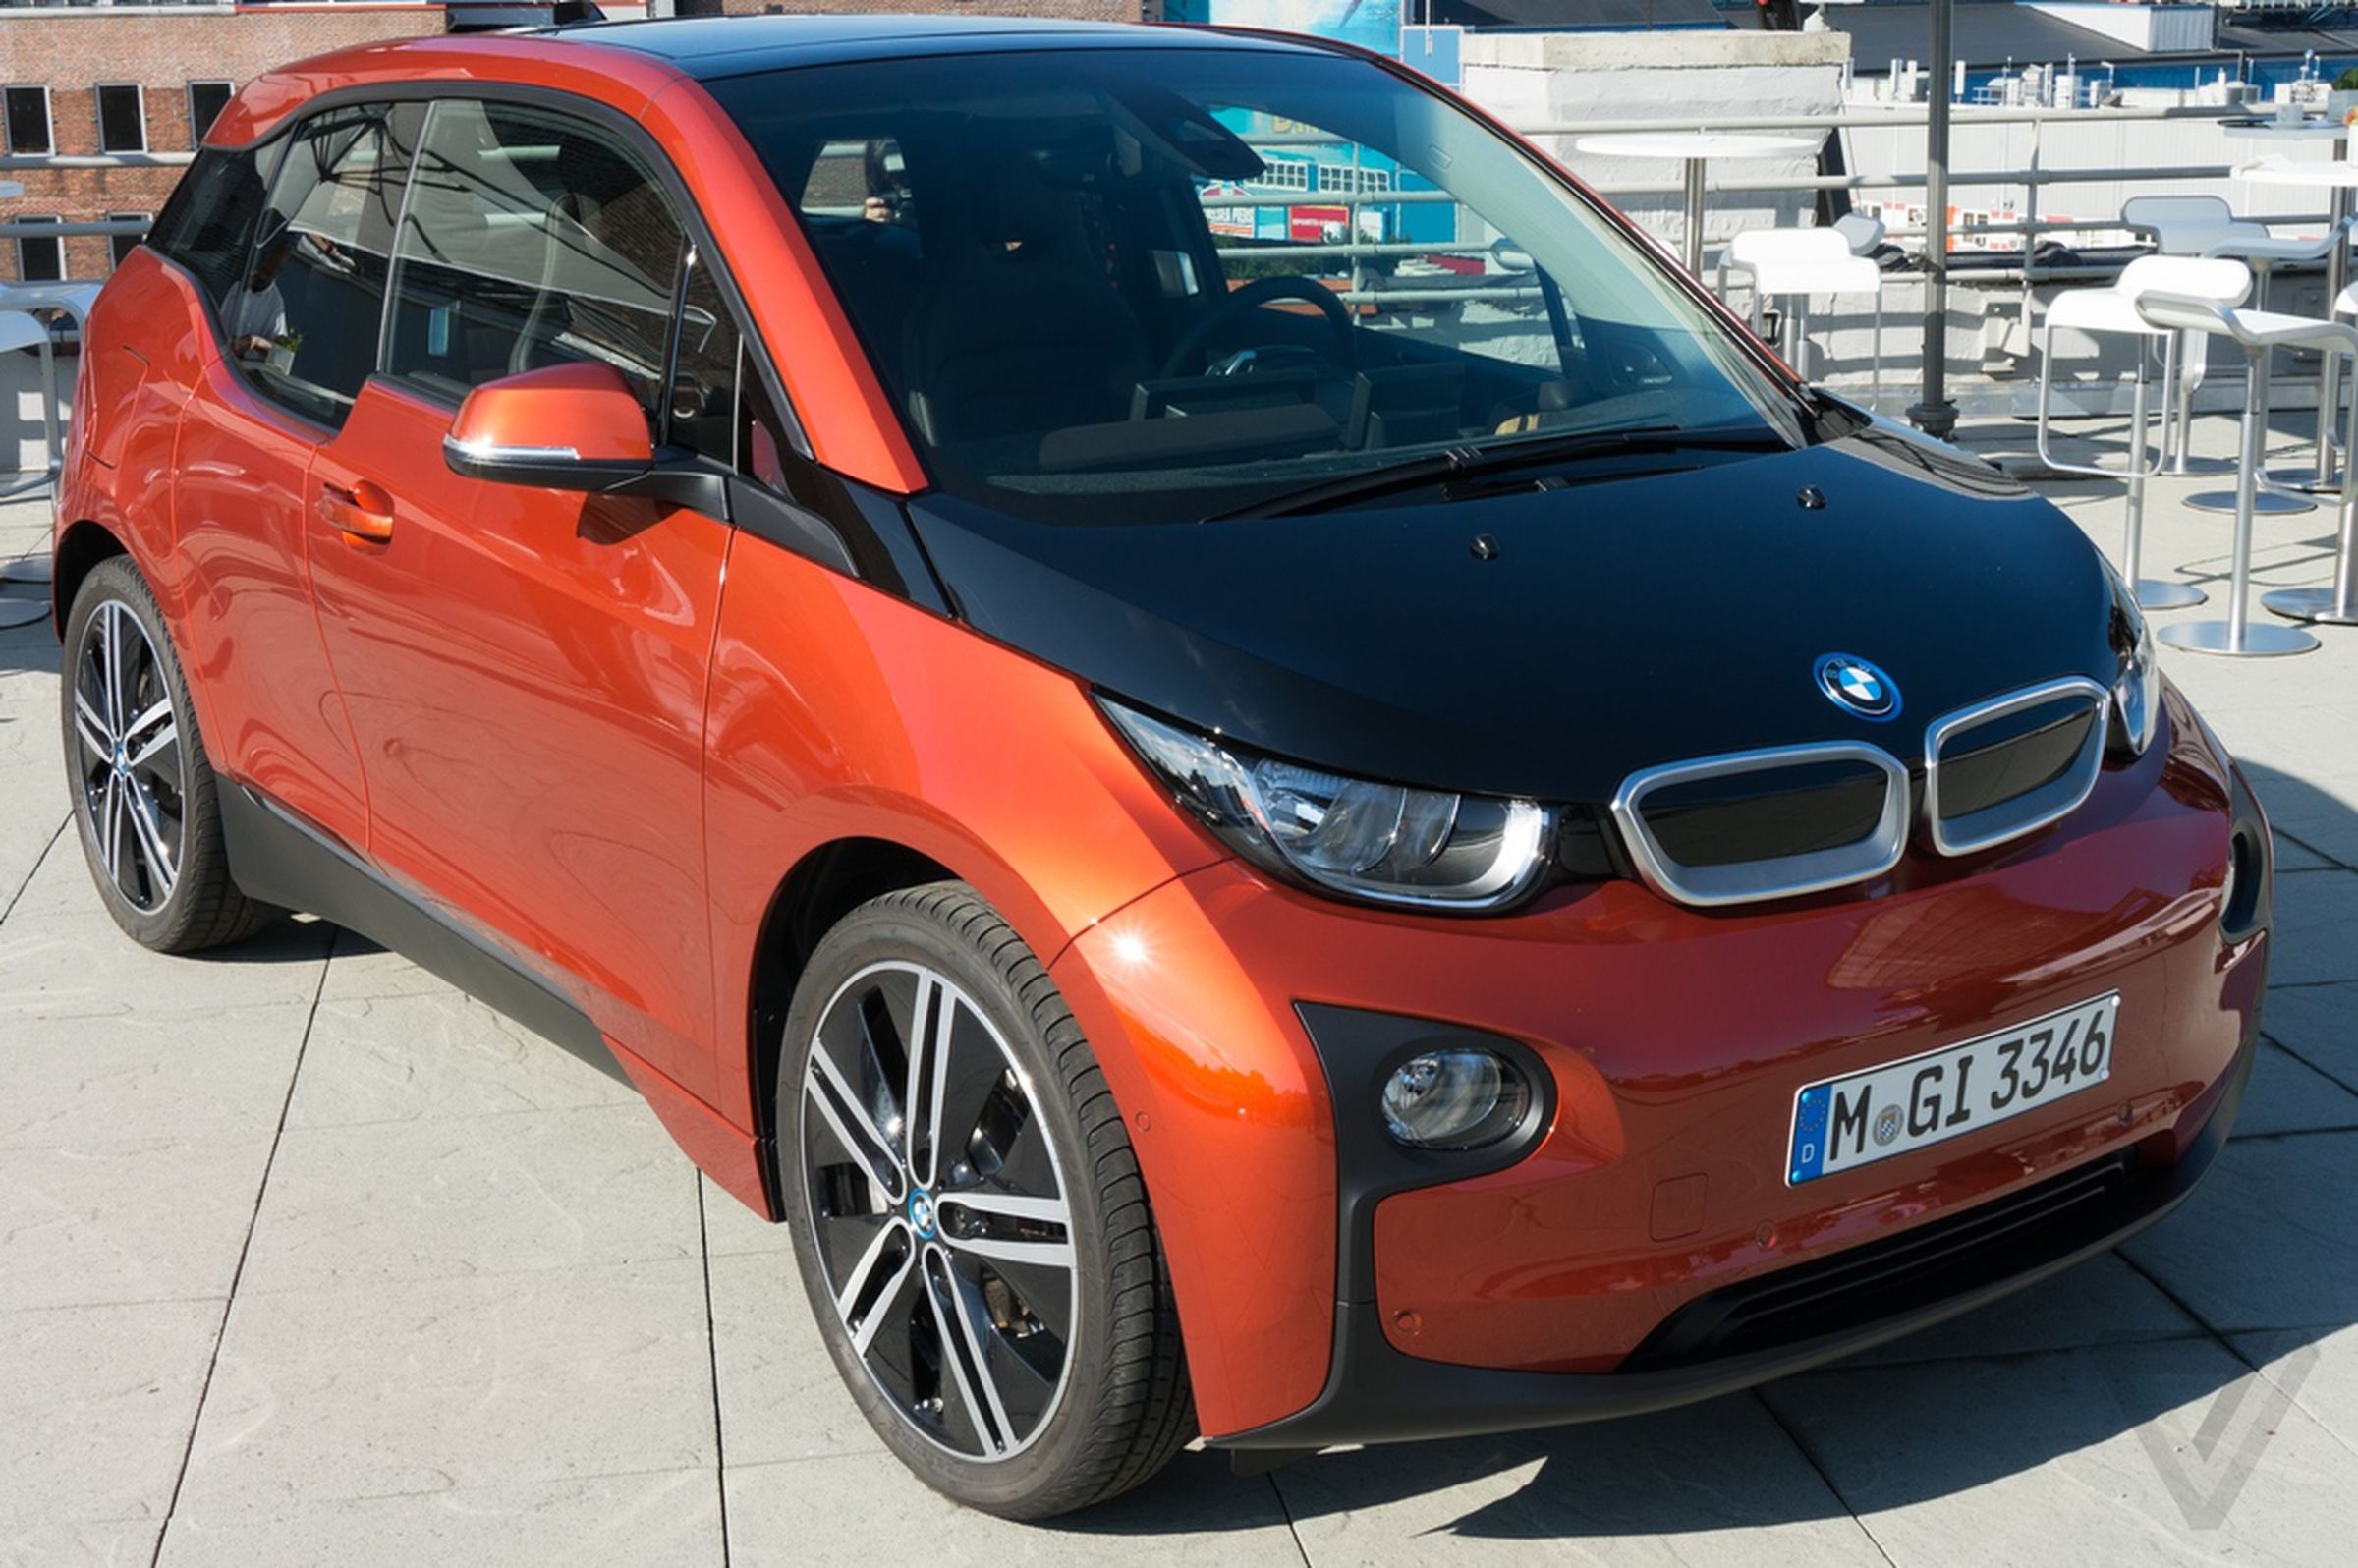 BMW i3 electric vehicle production model photos